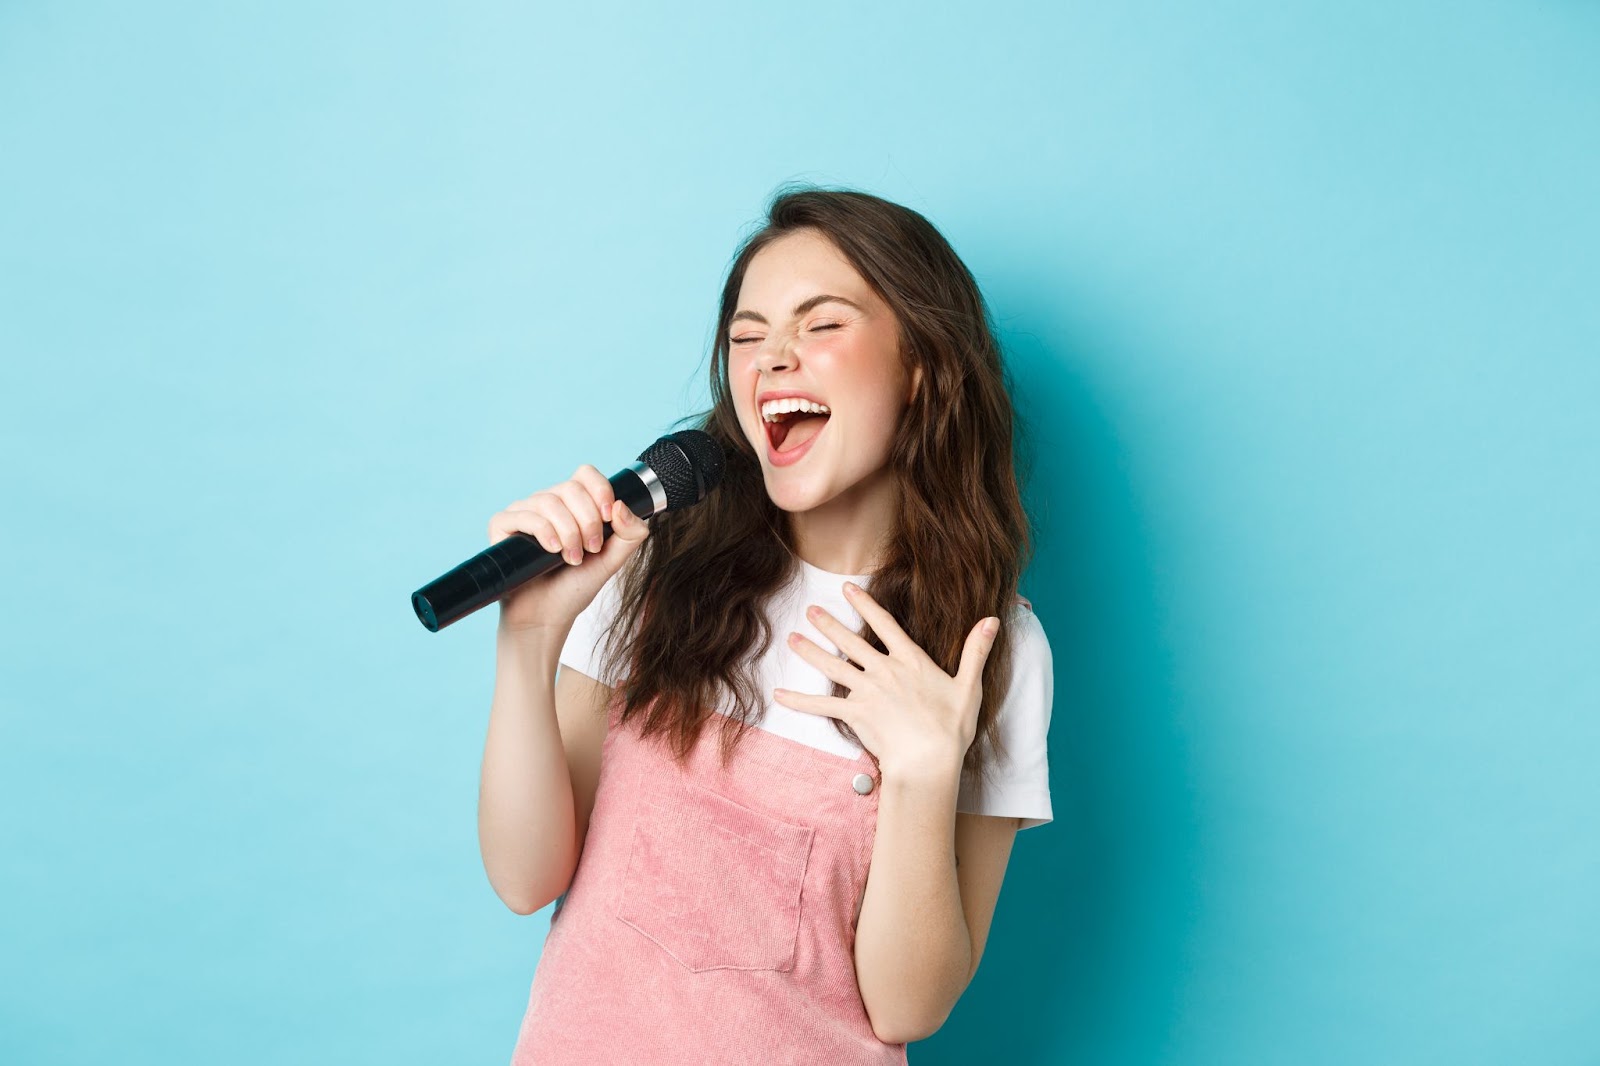 A girl singing